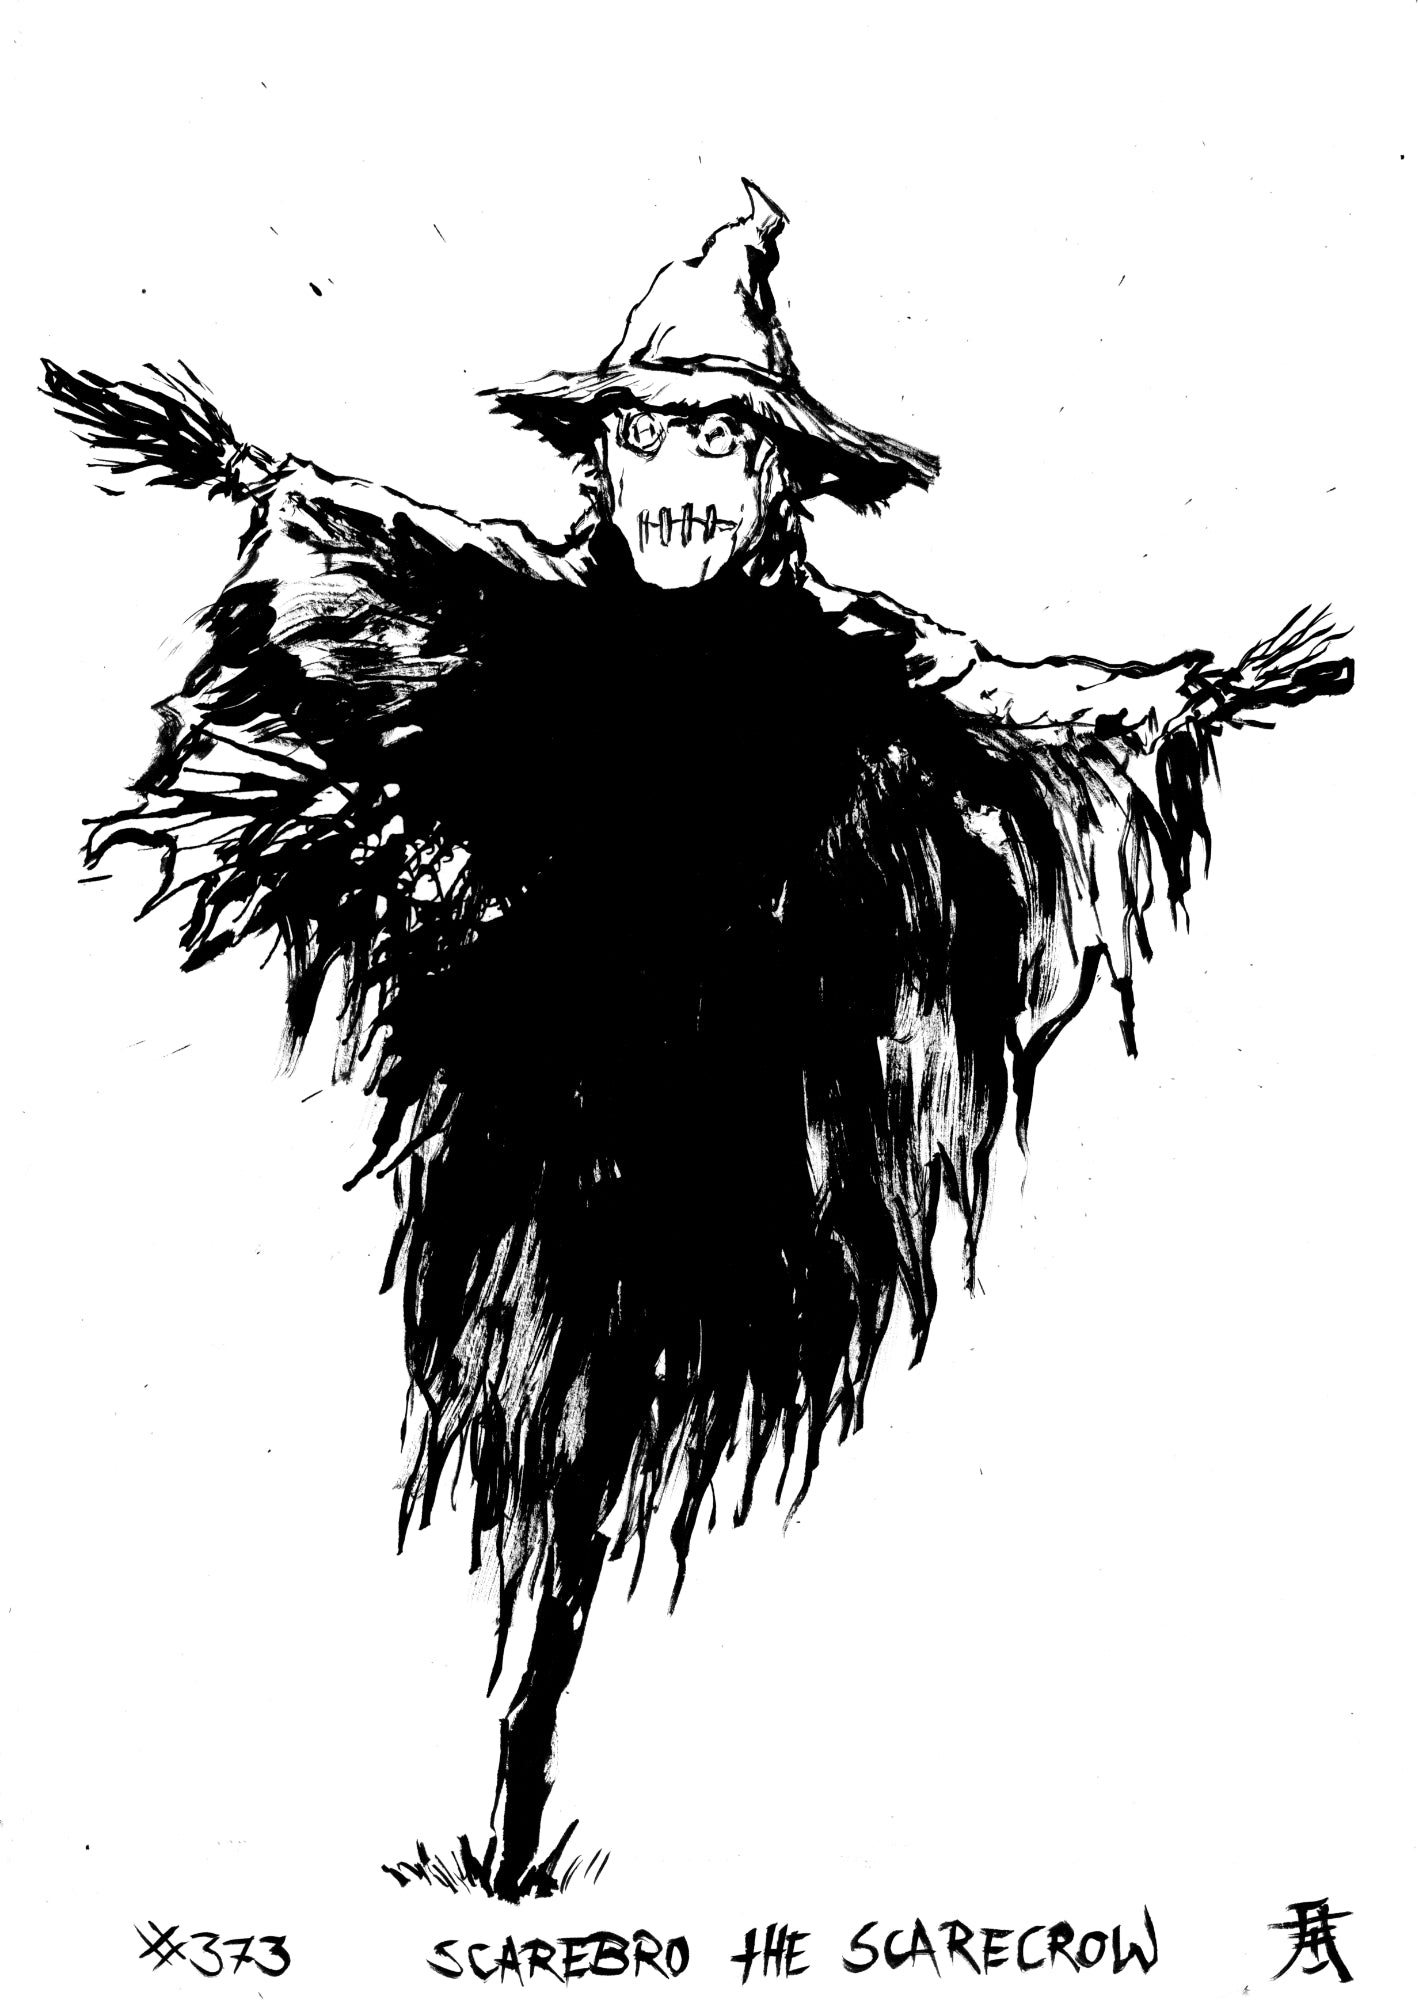 # 373 - Scarebro the Scarecrow